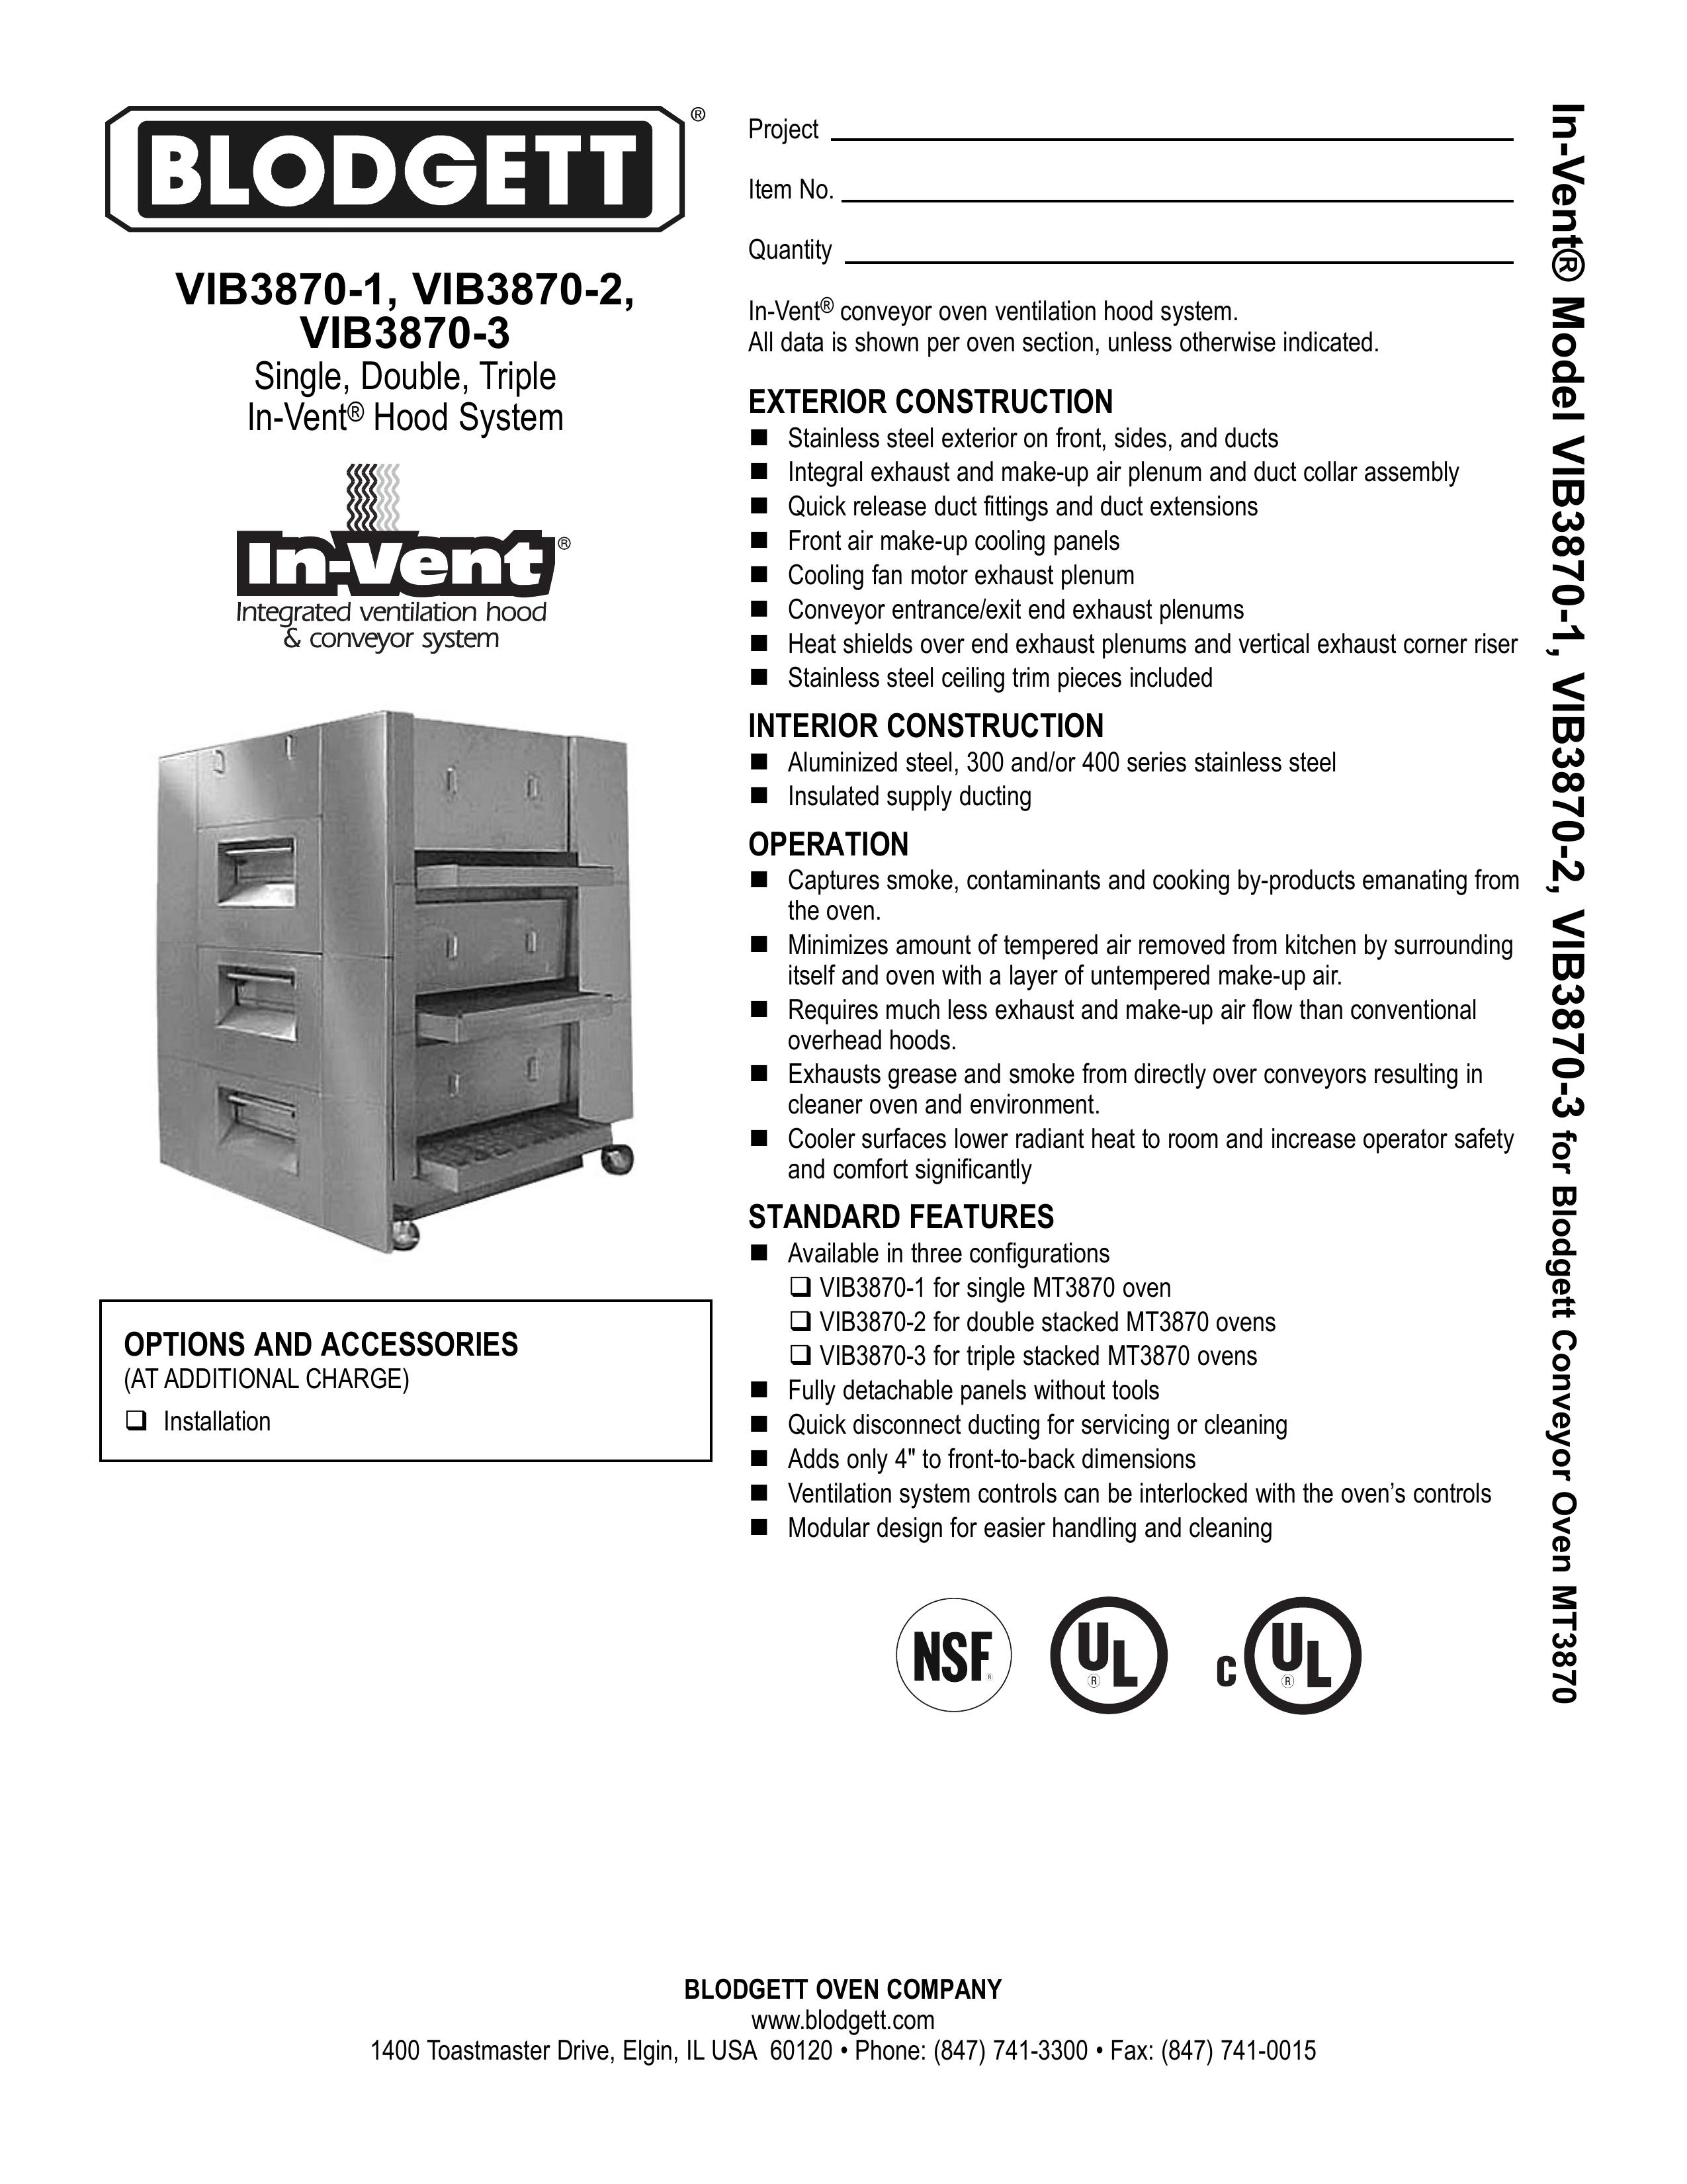 Blodgett VIB3870-1 Ventilation Hood User Manual